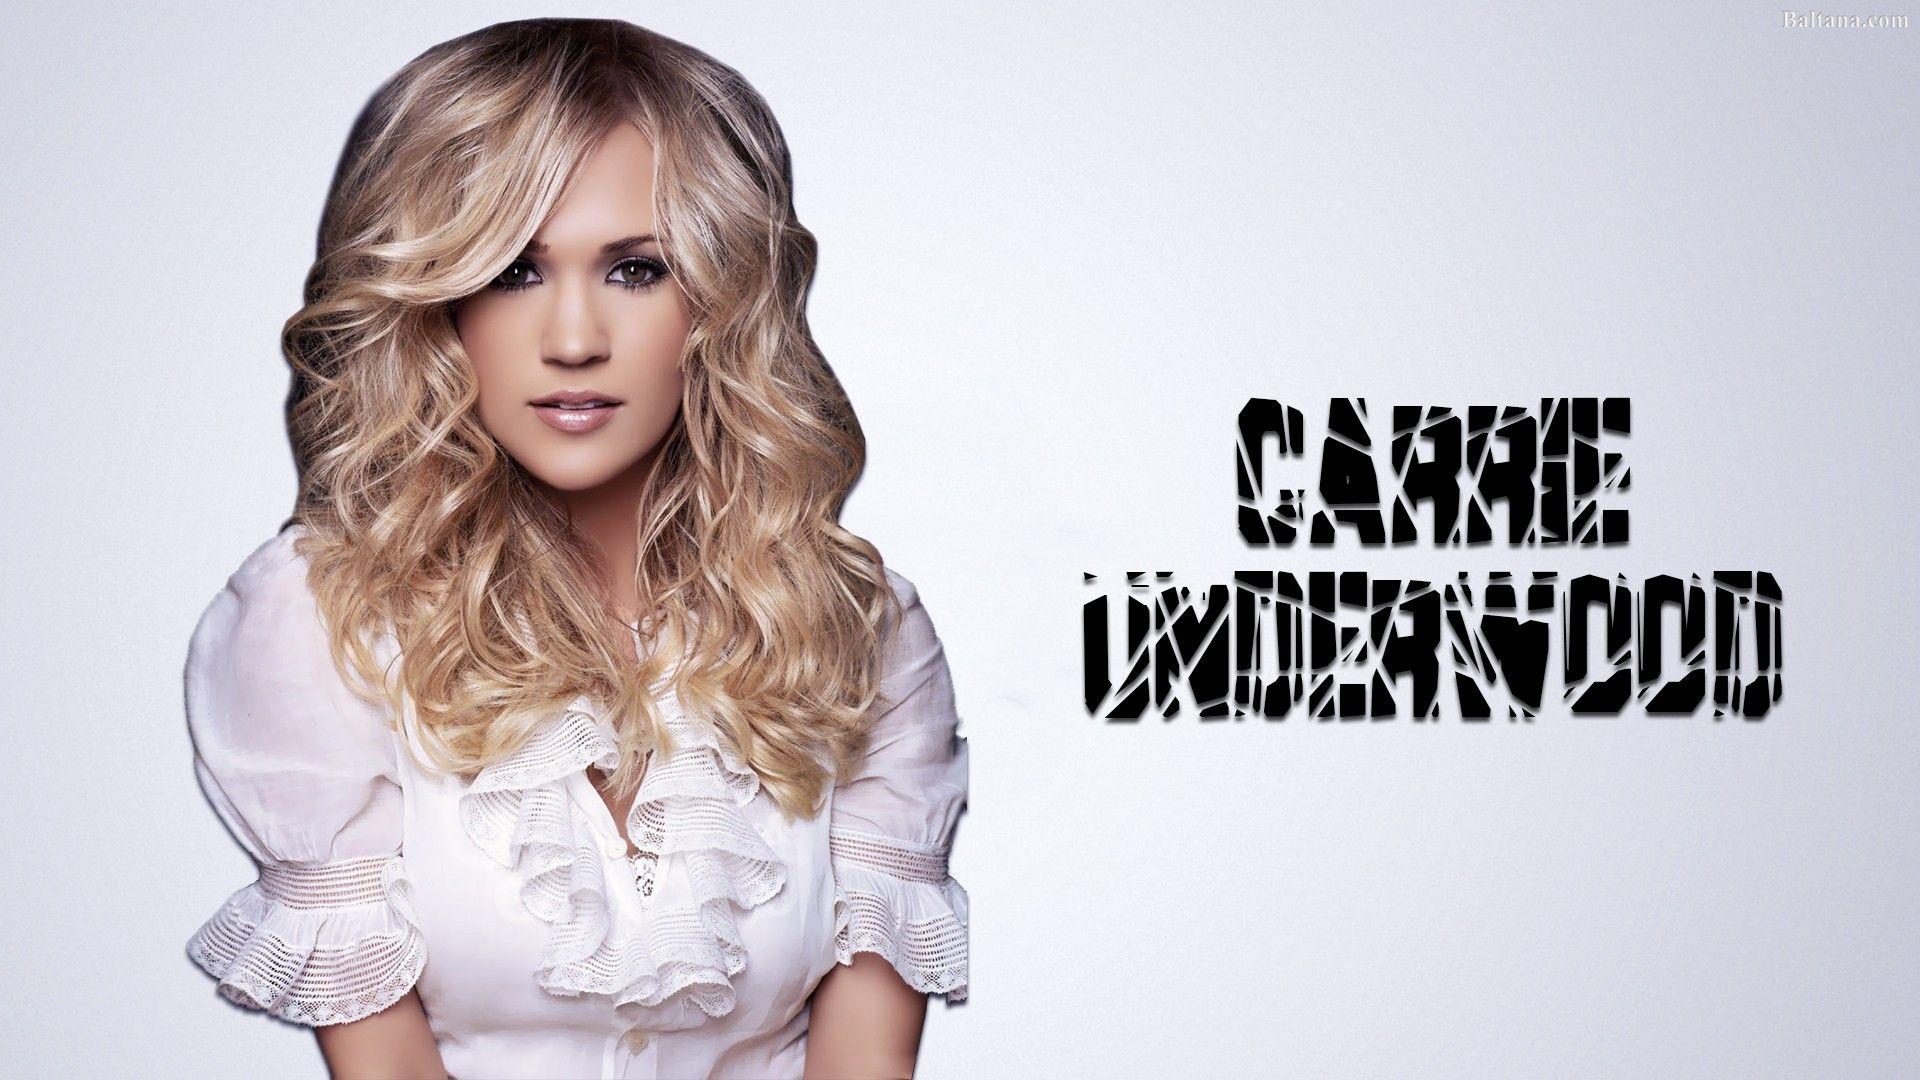 Carrie Underwood 2018 Wallpapers - Wallpaper Cave